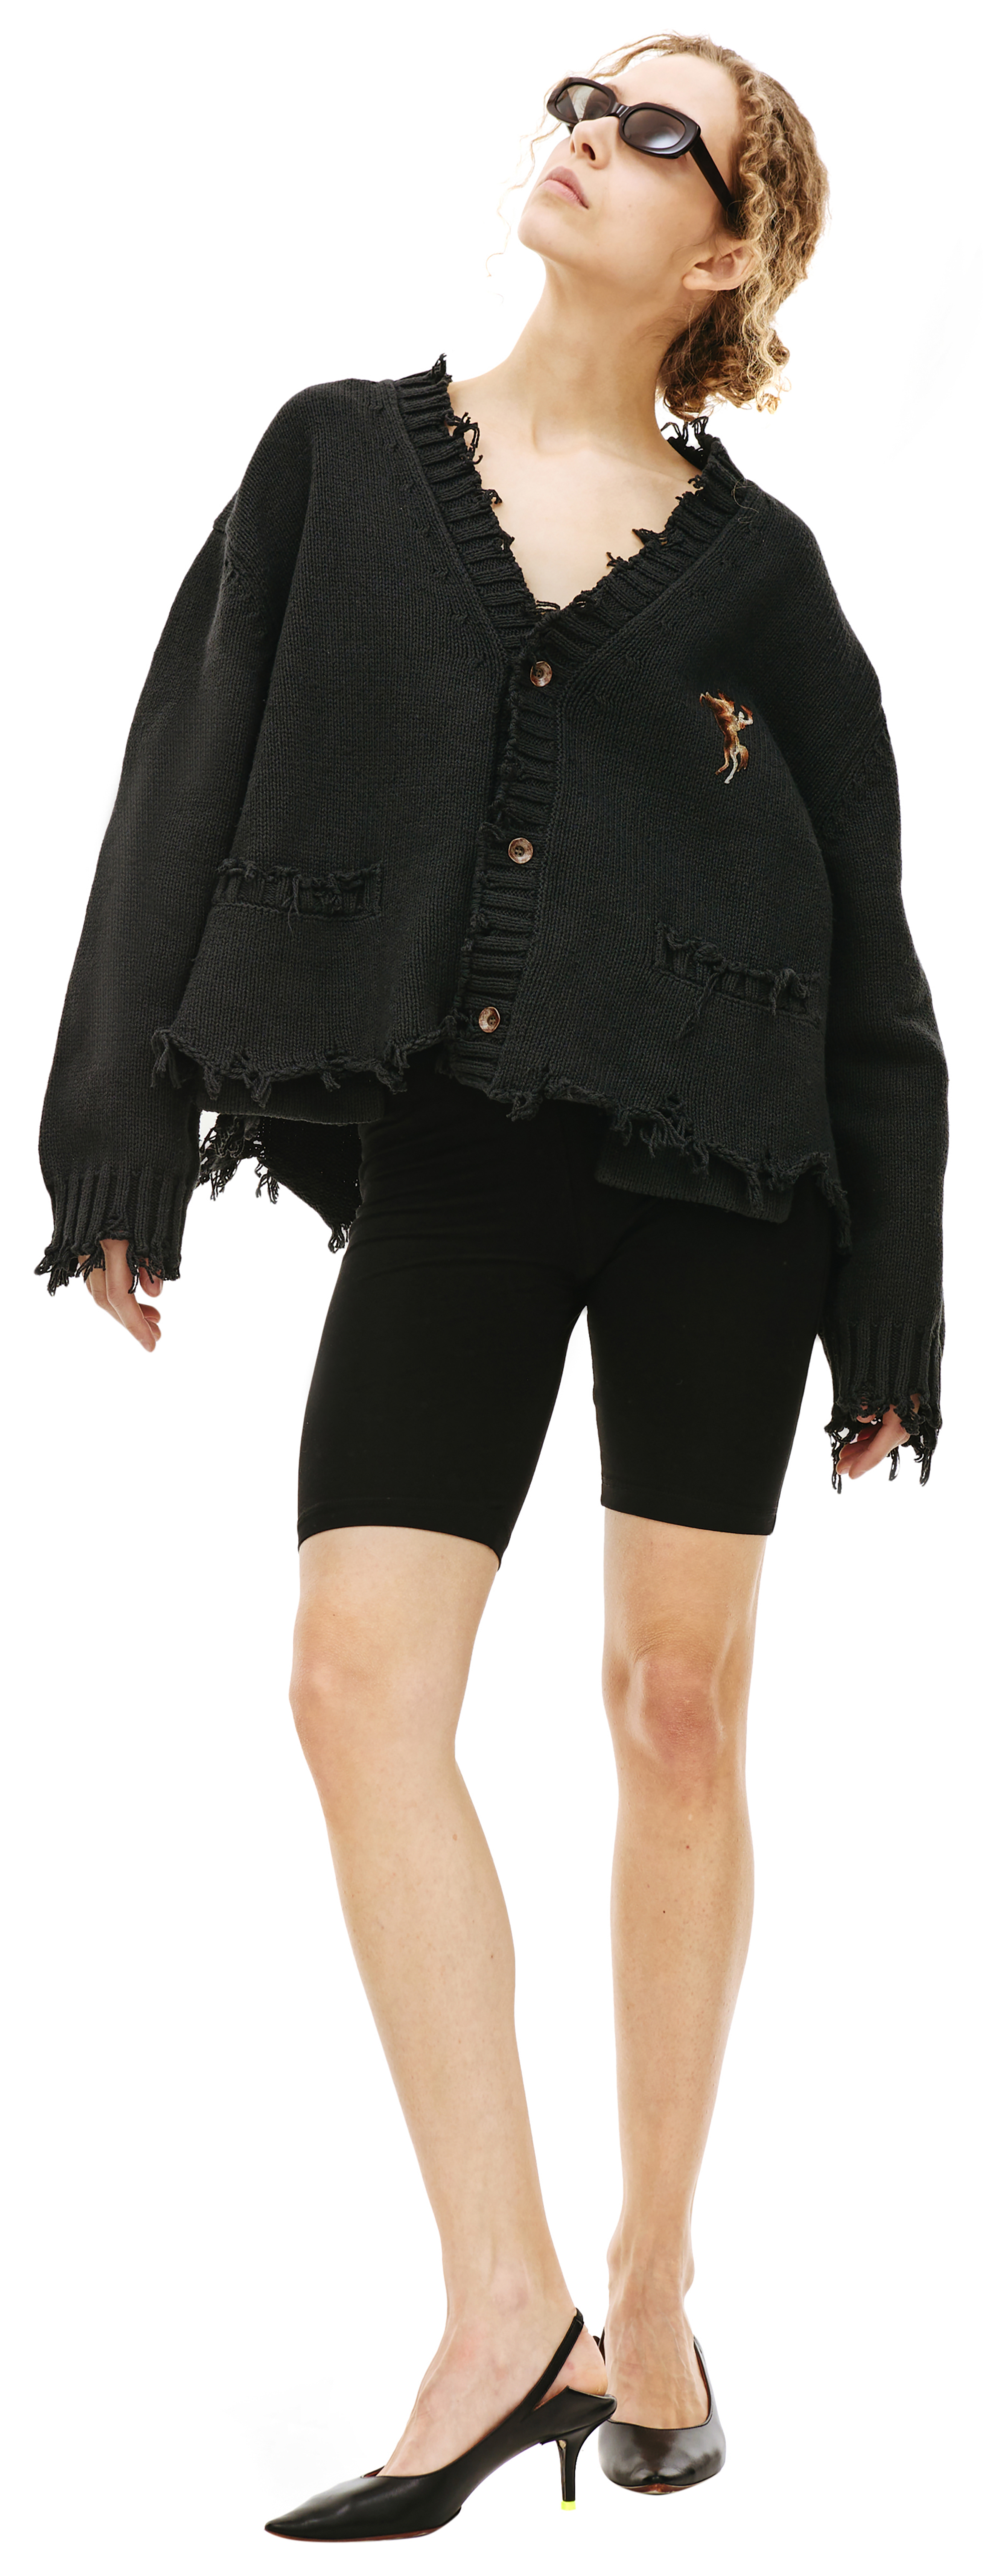 Buy Doublet women black oversized cut-off cardigan for $438 online